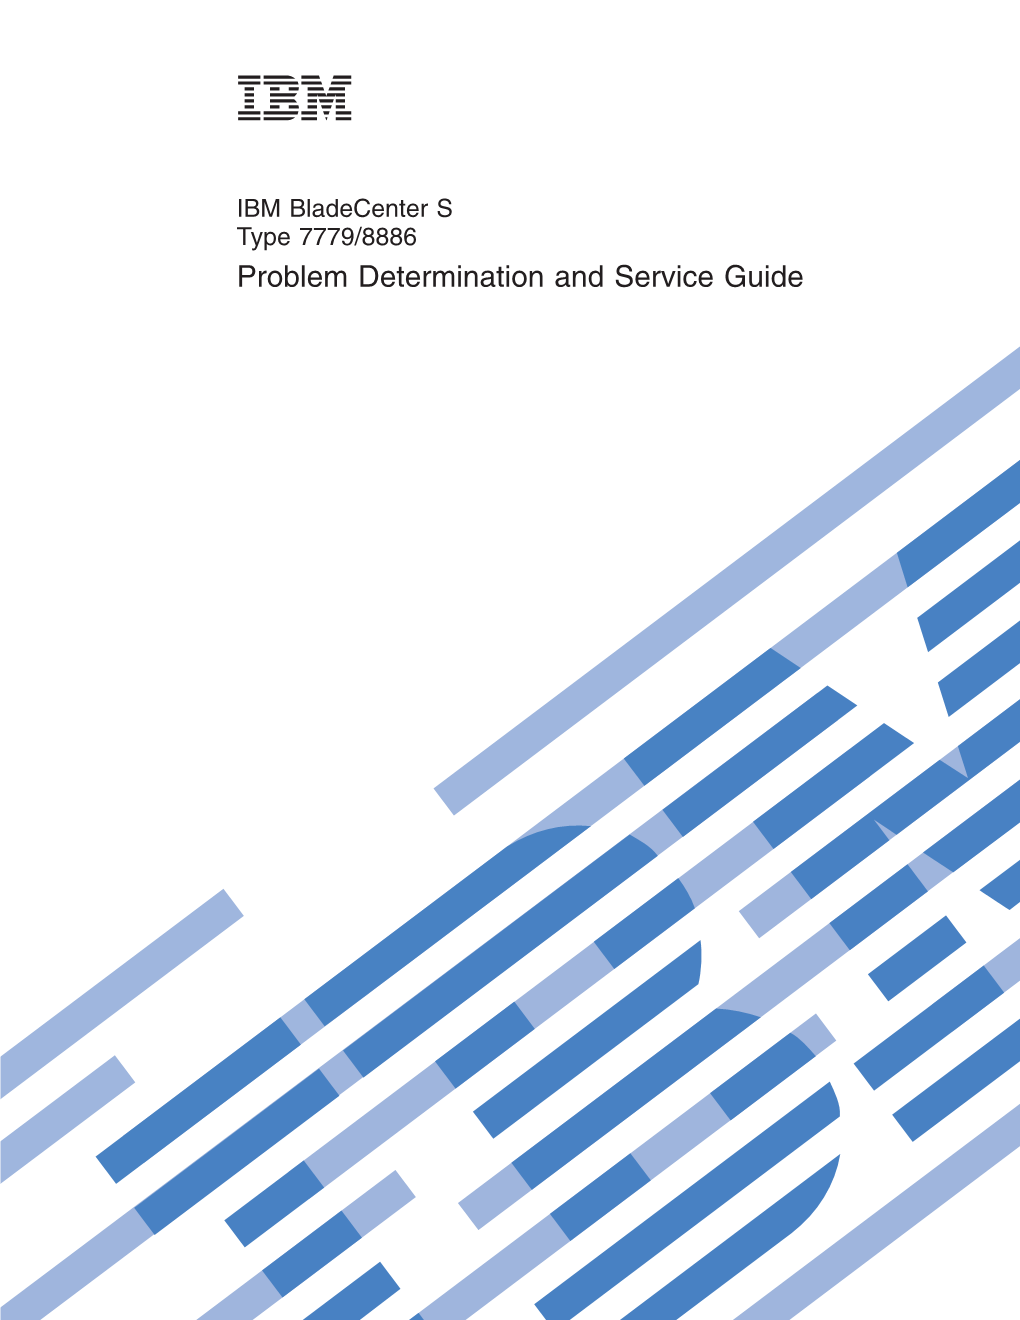 IBM Bladecenter S Type 7779/8886 Problem Determination and Service Guide